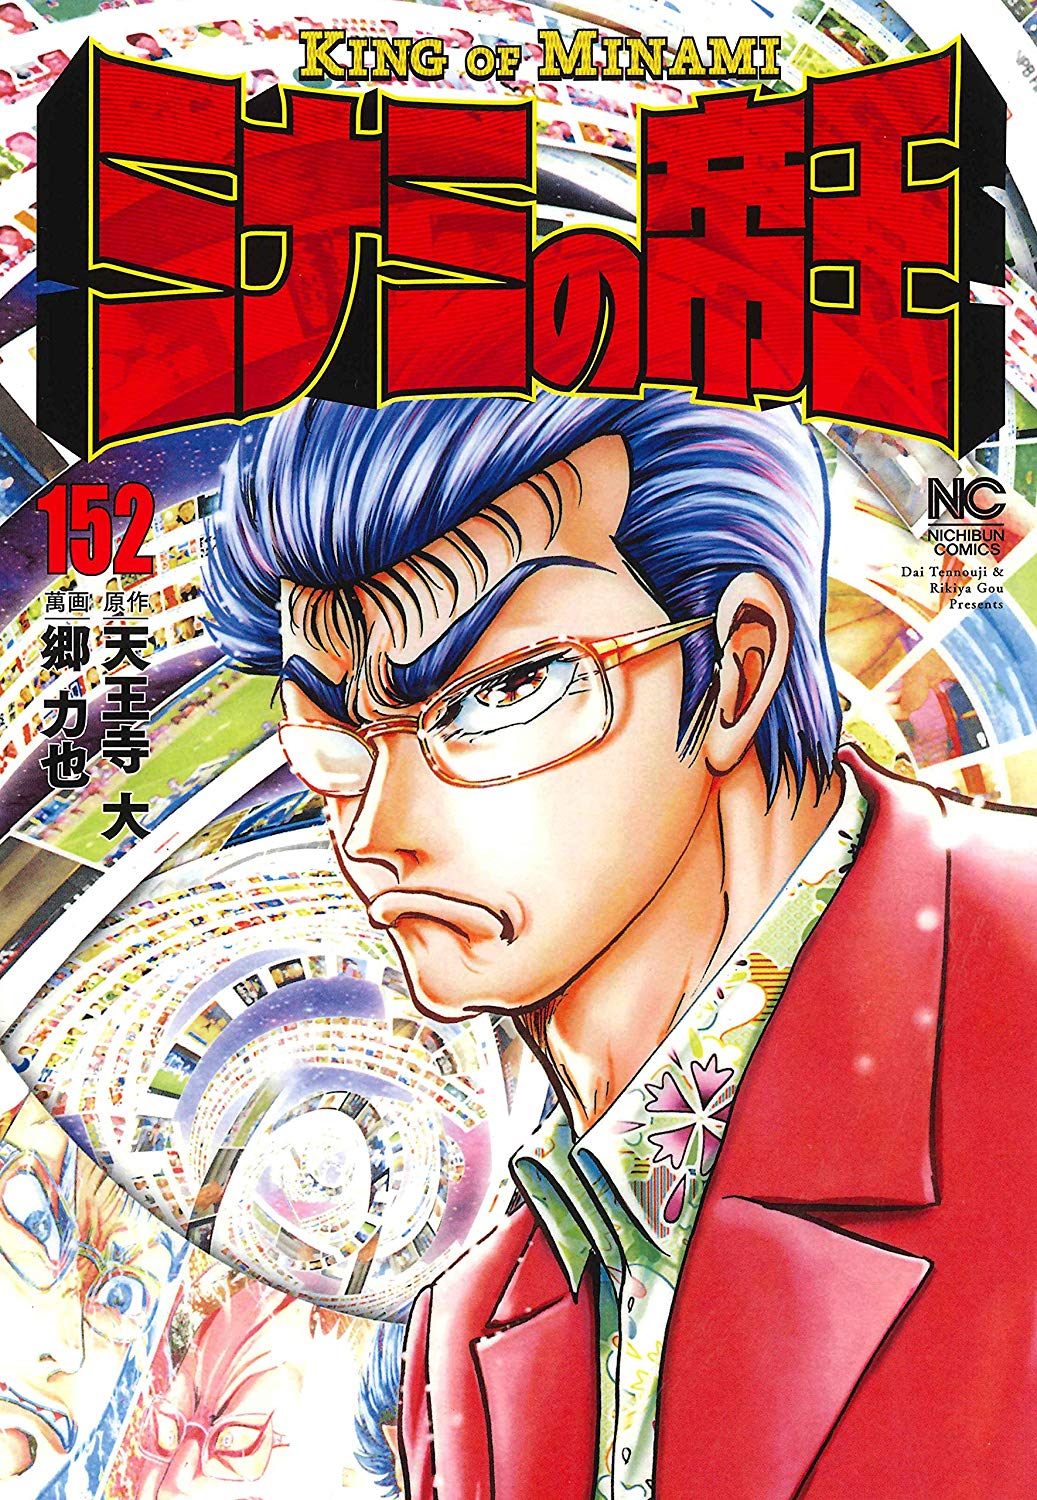 Manga Mogura Longrunning Criminal Underworld Manga Minami No Teiou Volume 152 Will Be Released On March 9 19